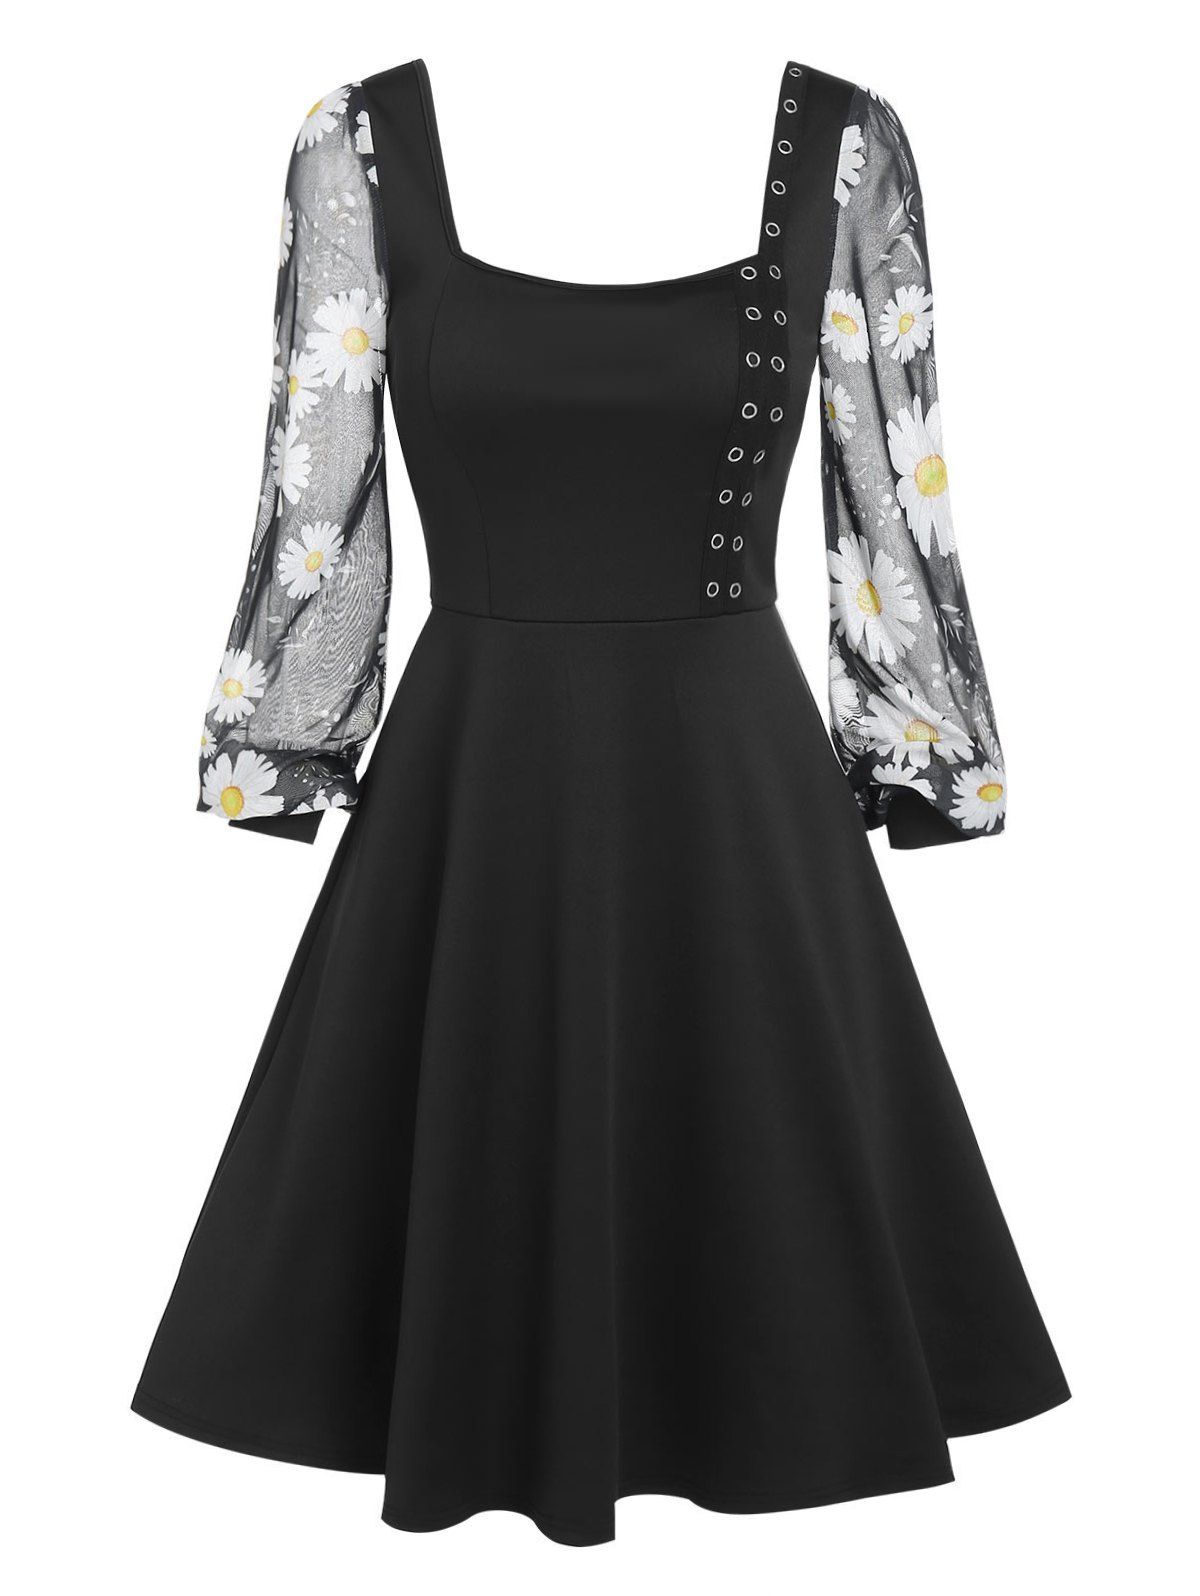 Daisy Print Mesh Lantern Sleeve Flare Dress - BLACK XXL